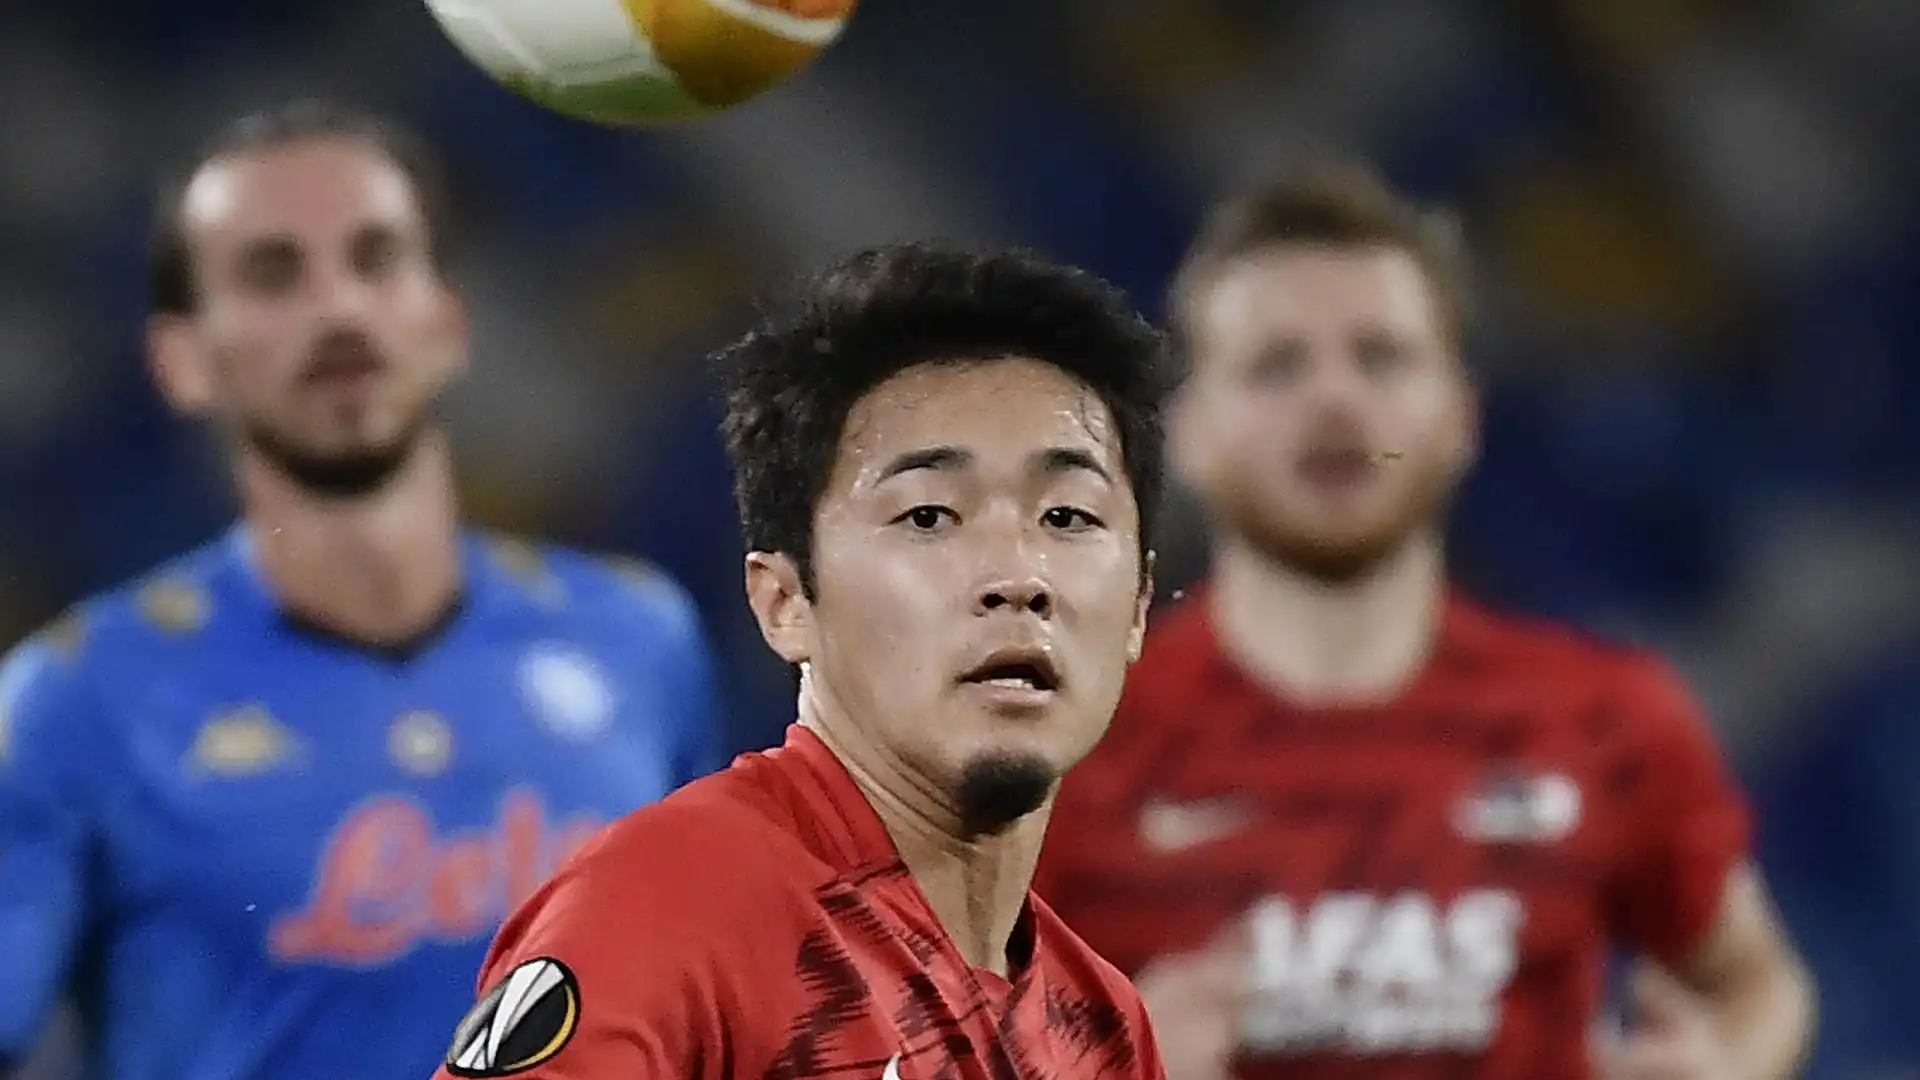 L'AZ Alkmaar ha acquistato Sugawara dal Nagoya Grampus nell'estate del 2019